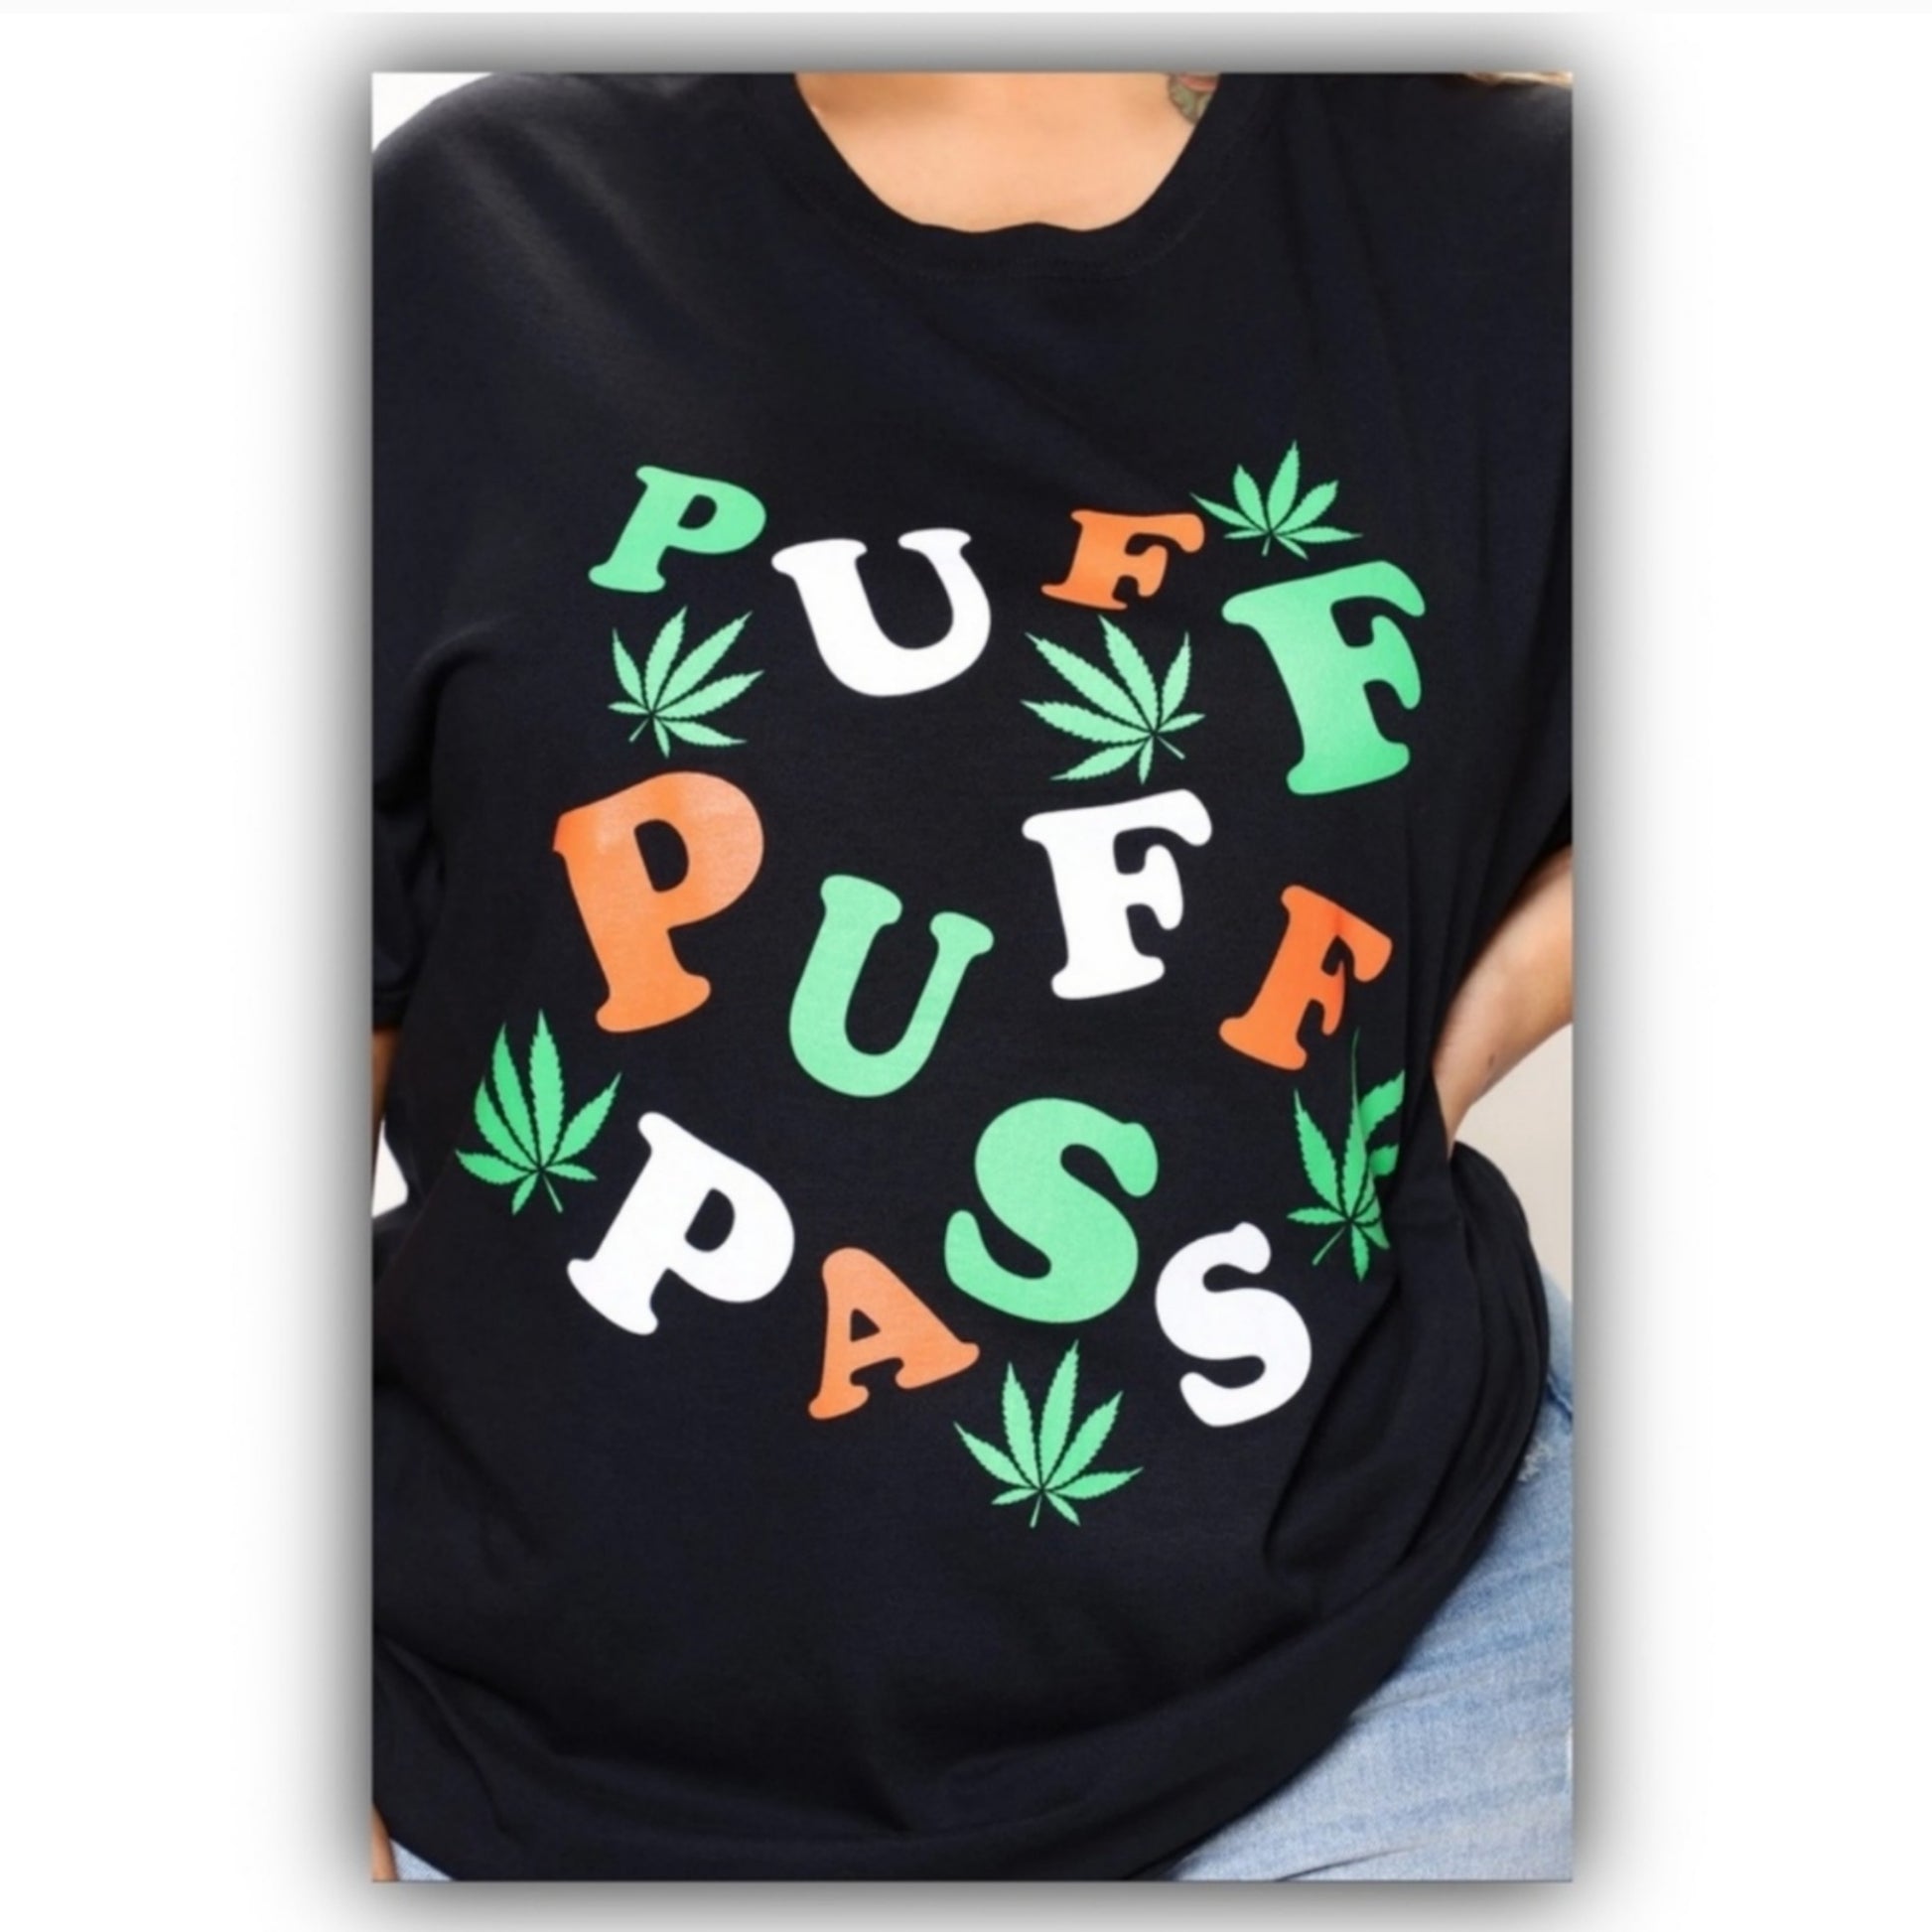 Unisex Graphic Tee | Puff Puff Pass | Print Comfy Cotton Black T-Shirt - Fashion Nova - Shirts